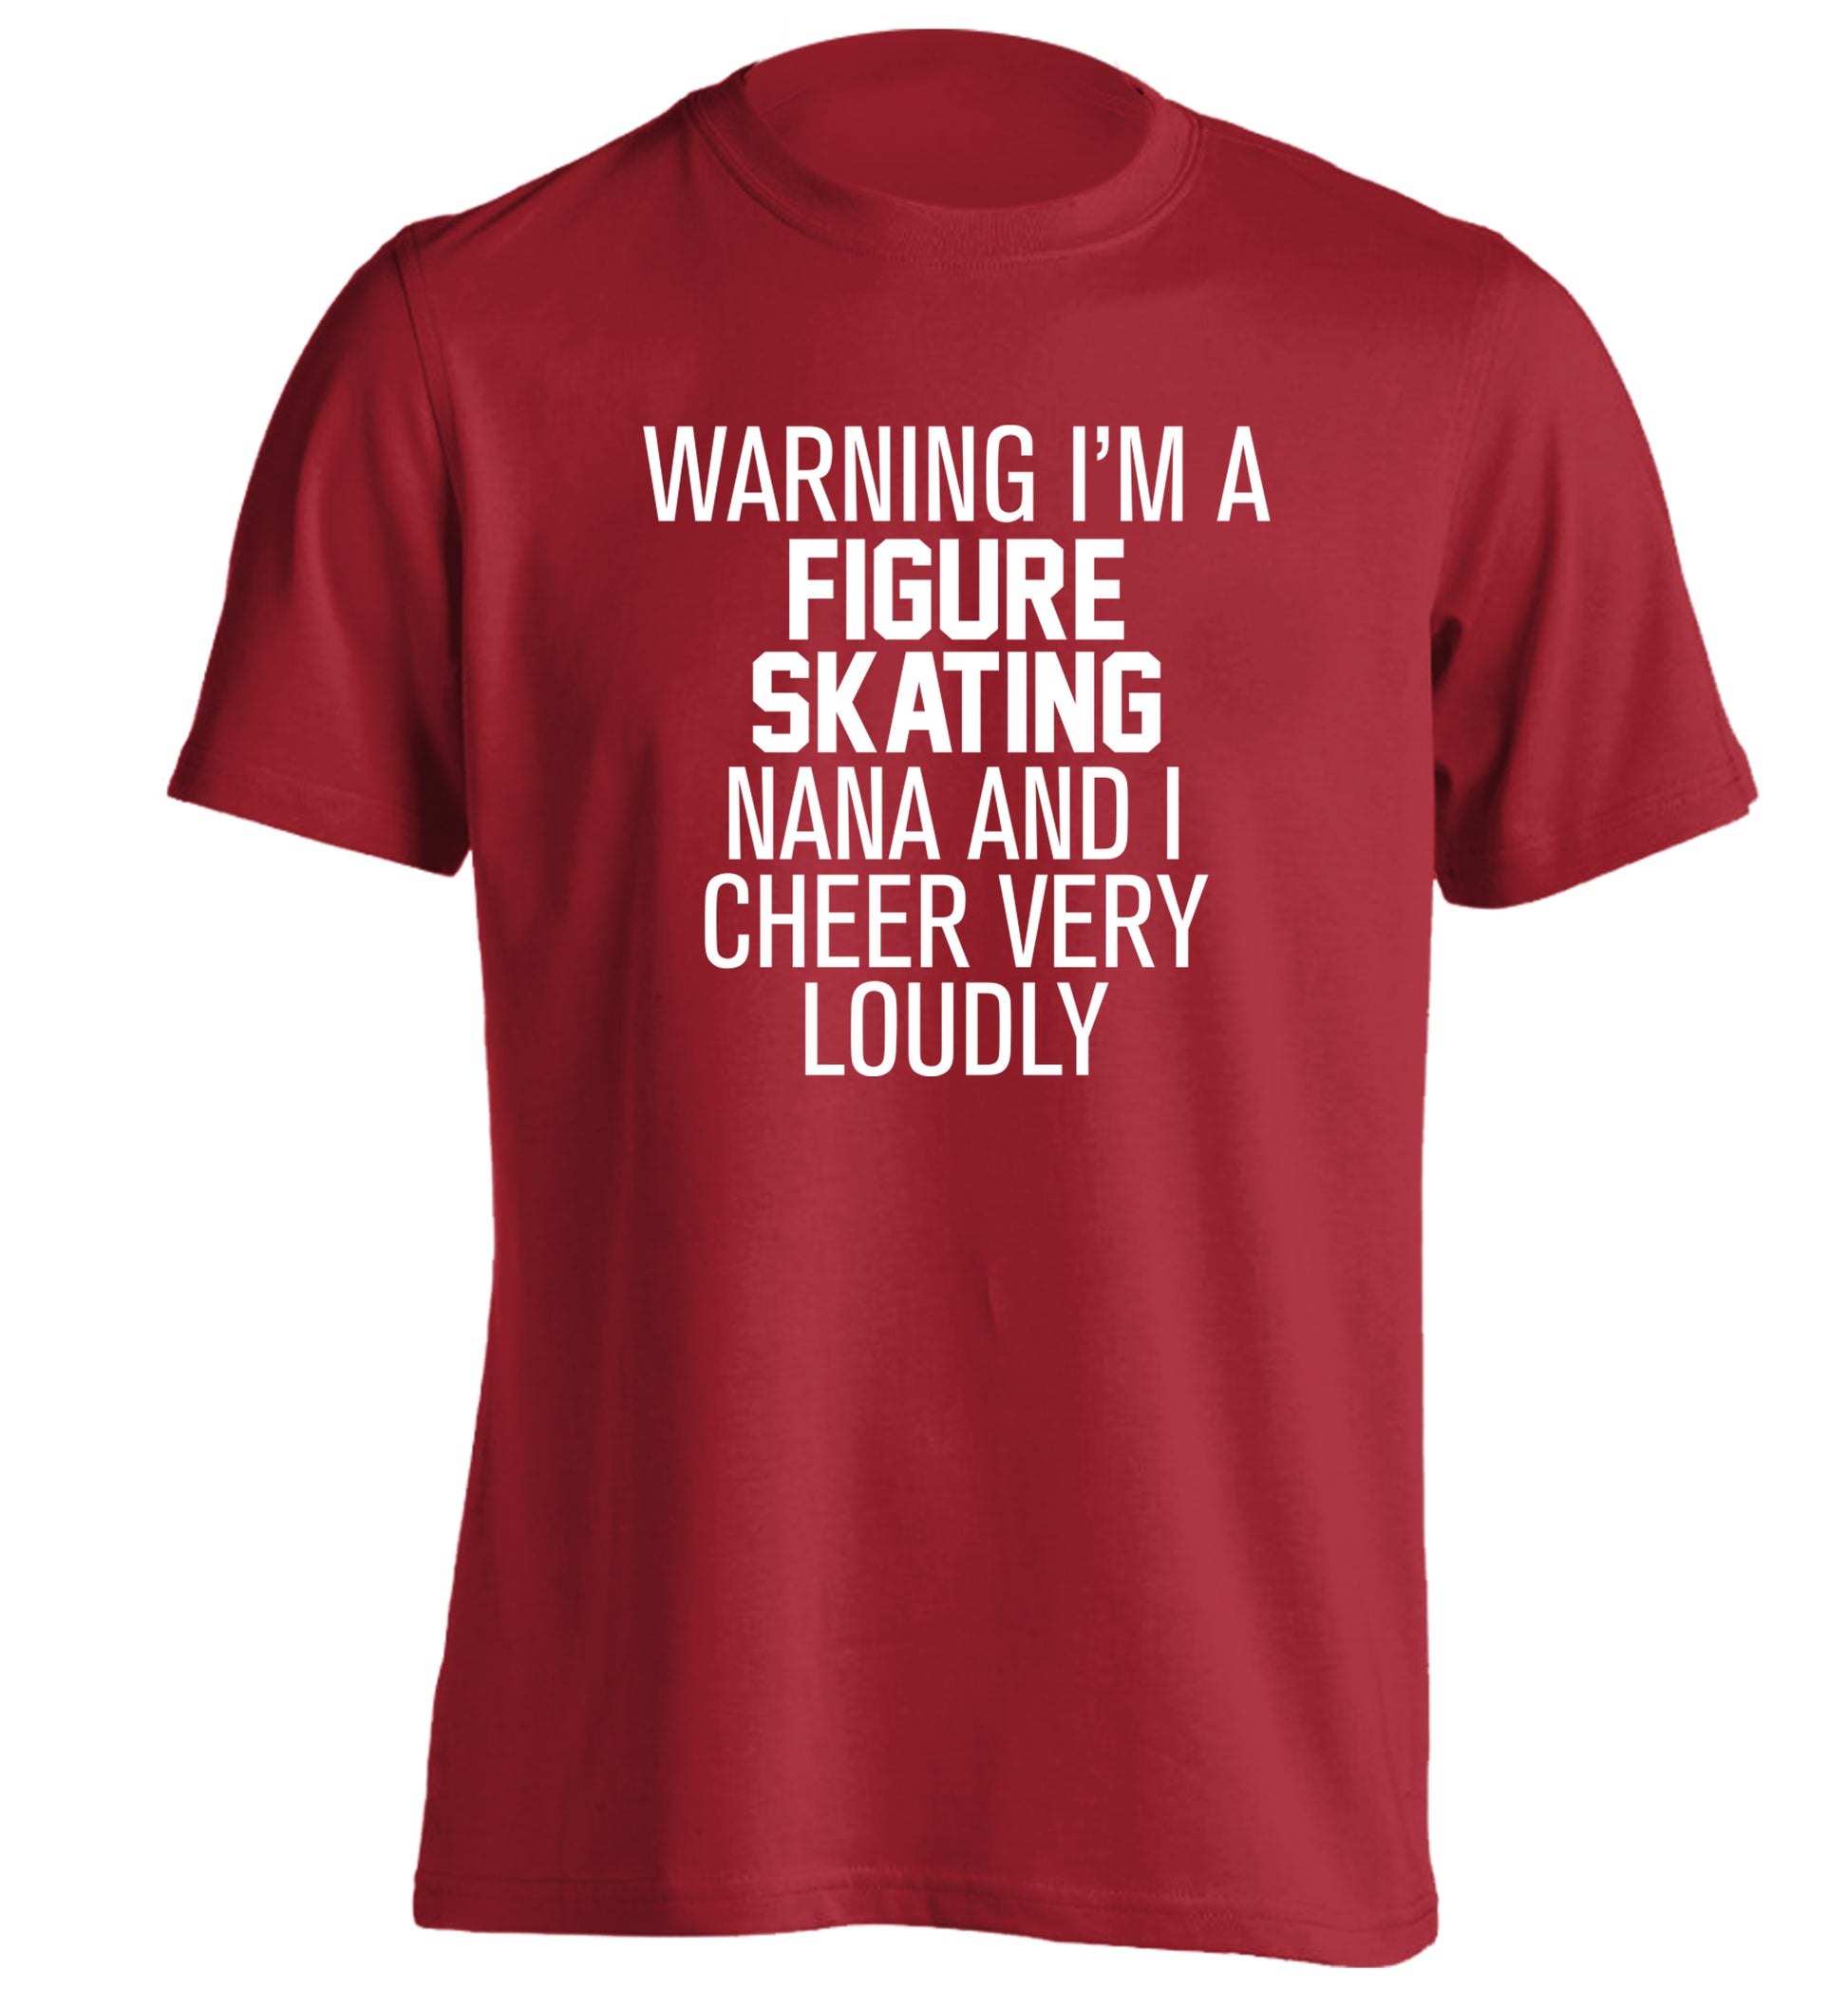 Warning I'm a figure skating nana and I cheer very loudly adults unisexred Tshirt 2XL